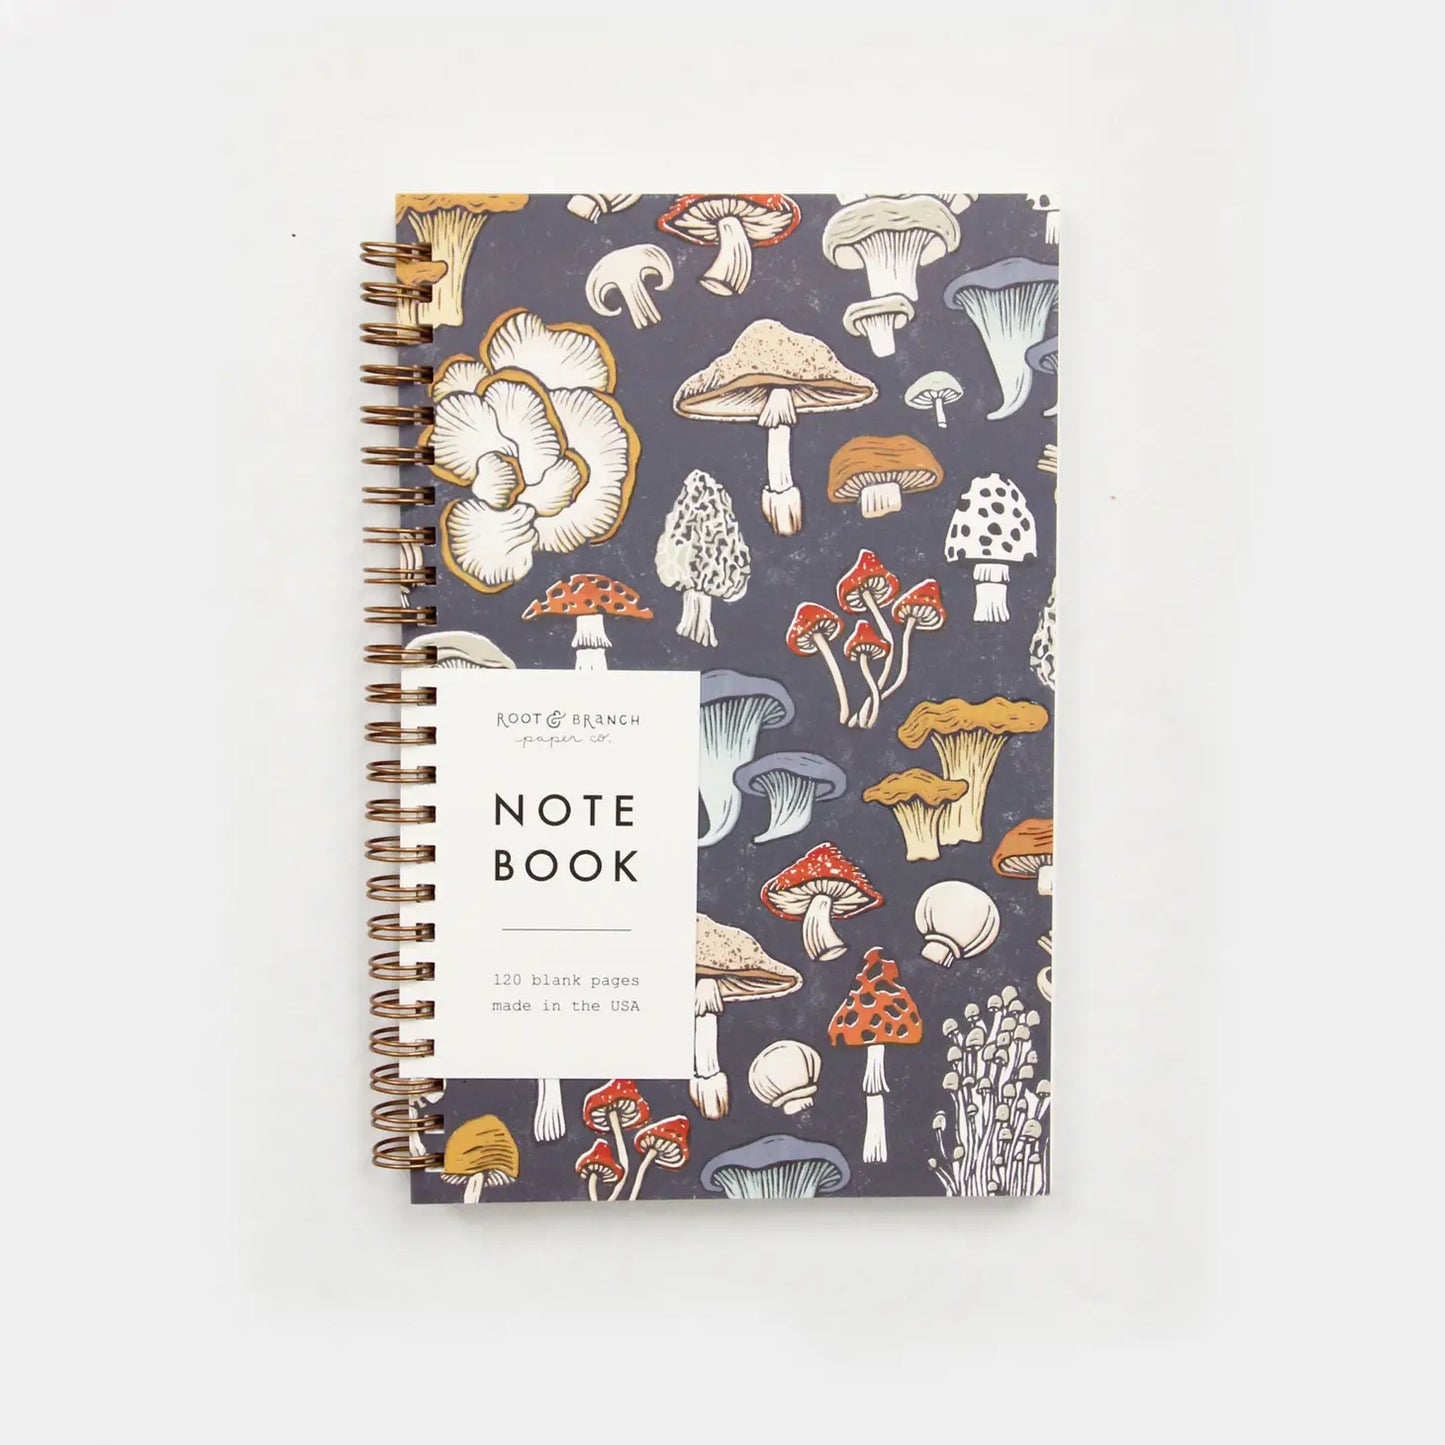 Mushroom and fungi designed spiral bound notebook 